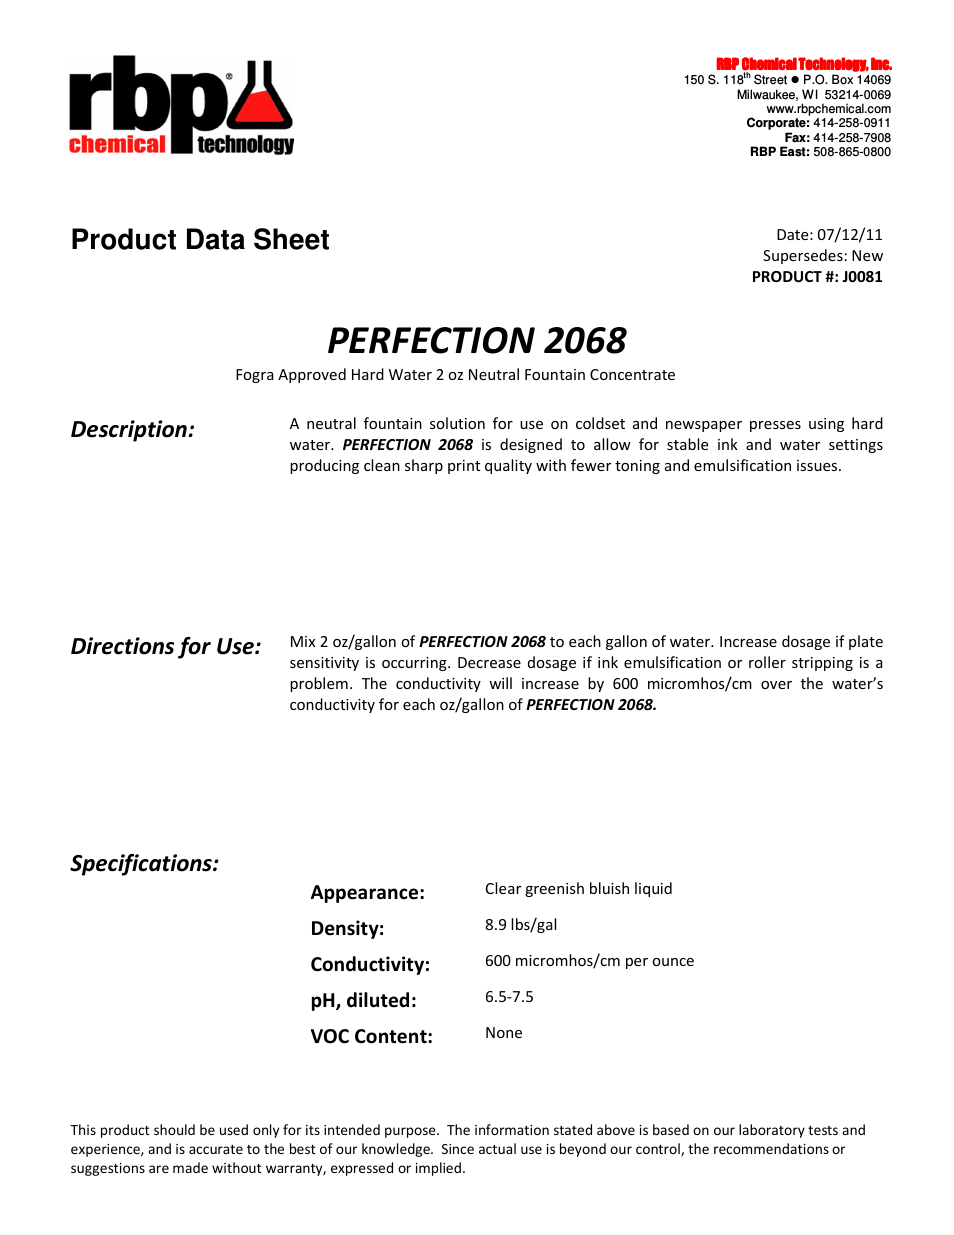 J0081 PERFECTION 2068